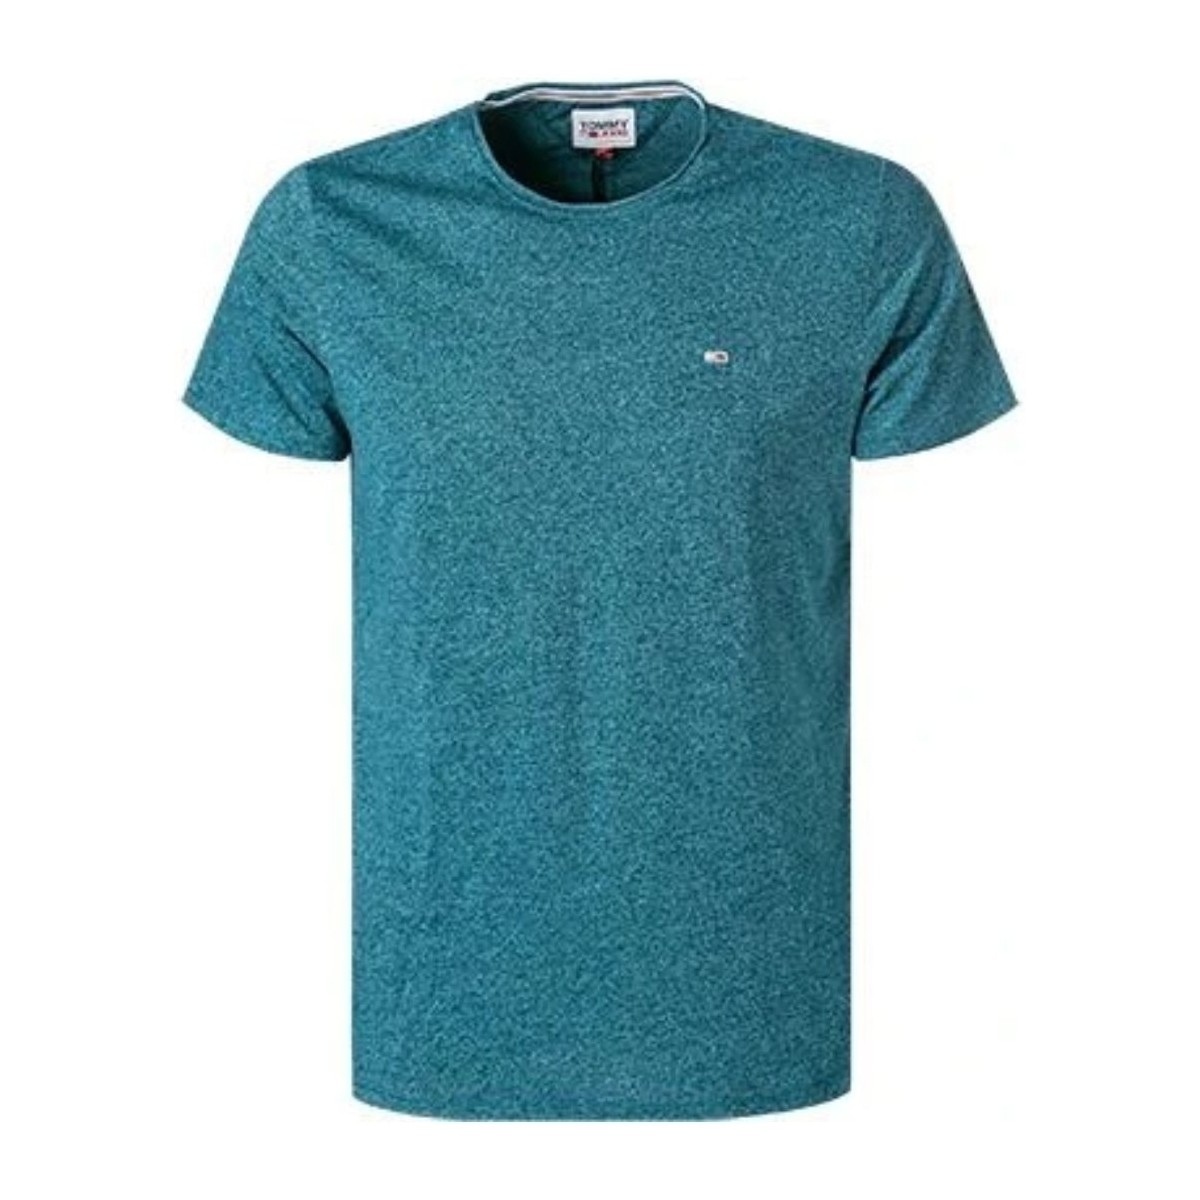 Vêtements Homme T-shirts & Polos Tommy Hilfiger T Shirt chine Tommy Jeans Ref 57324 CWJ bleu Bleu